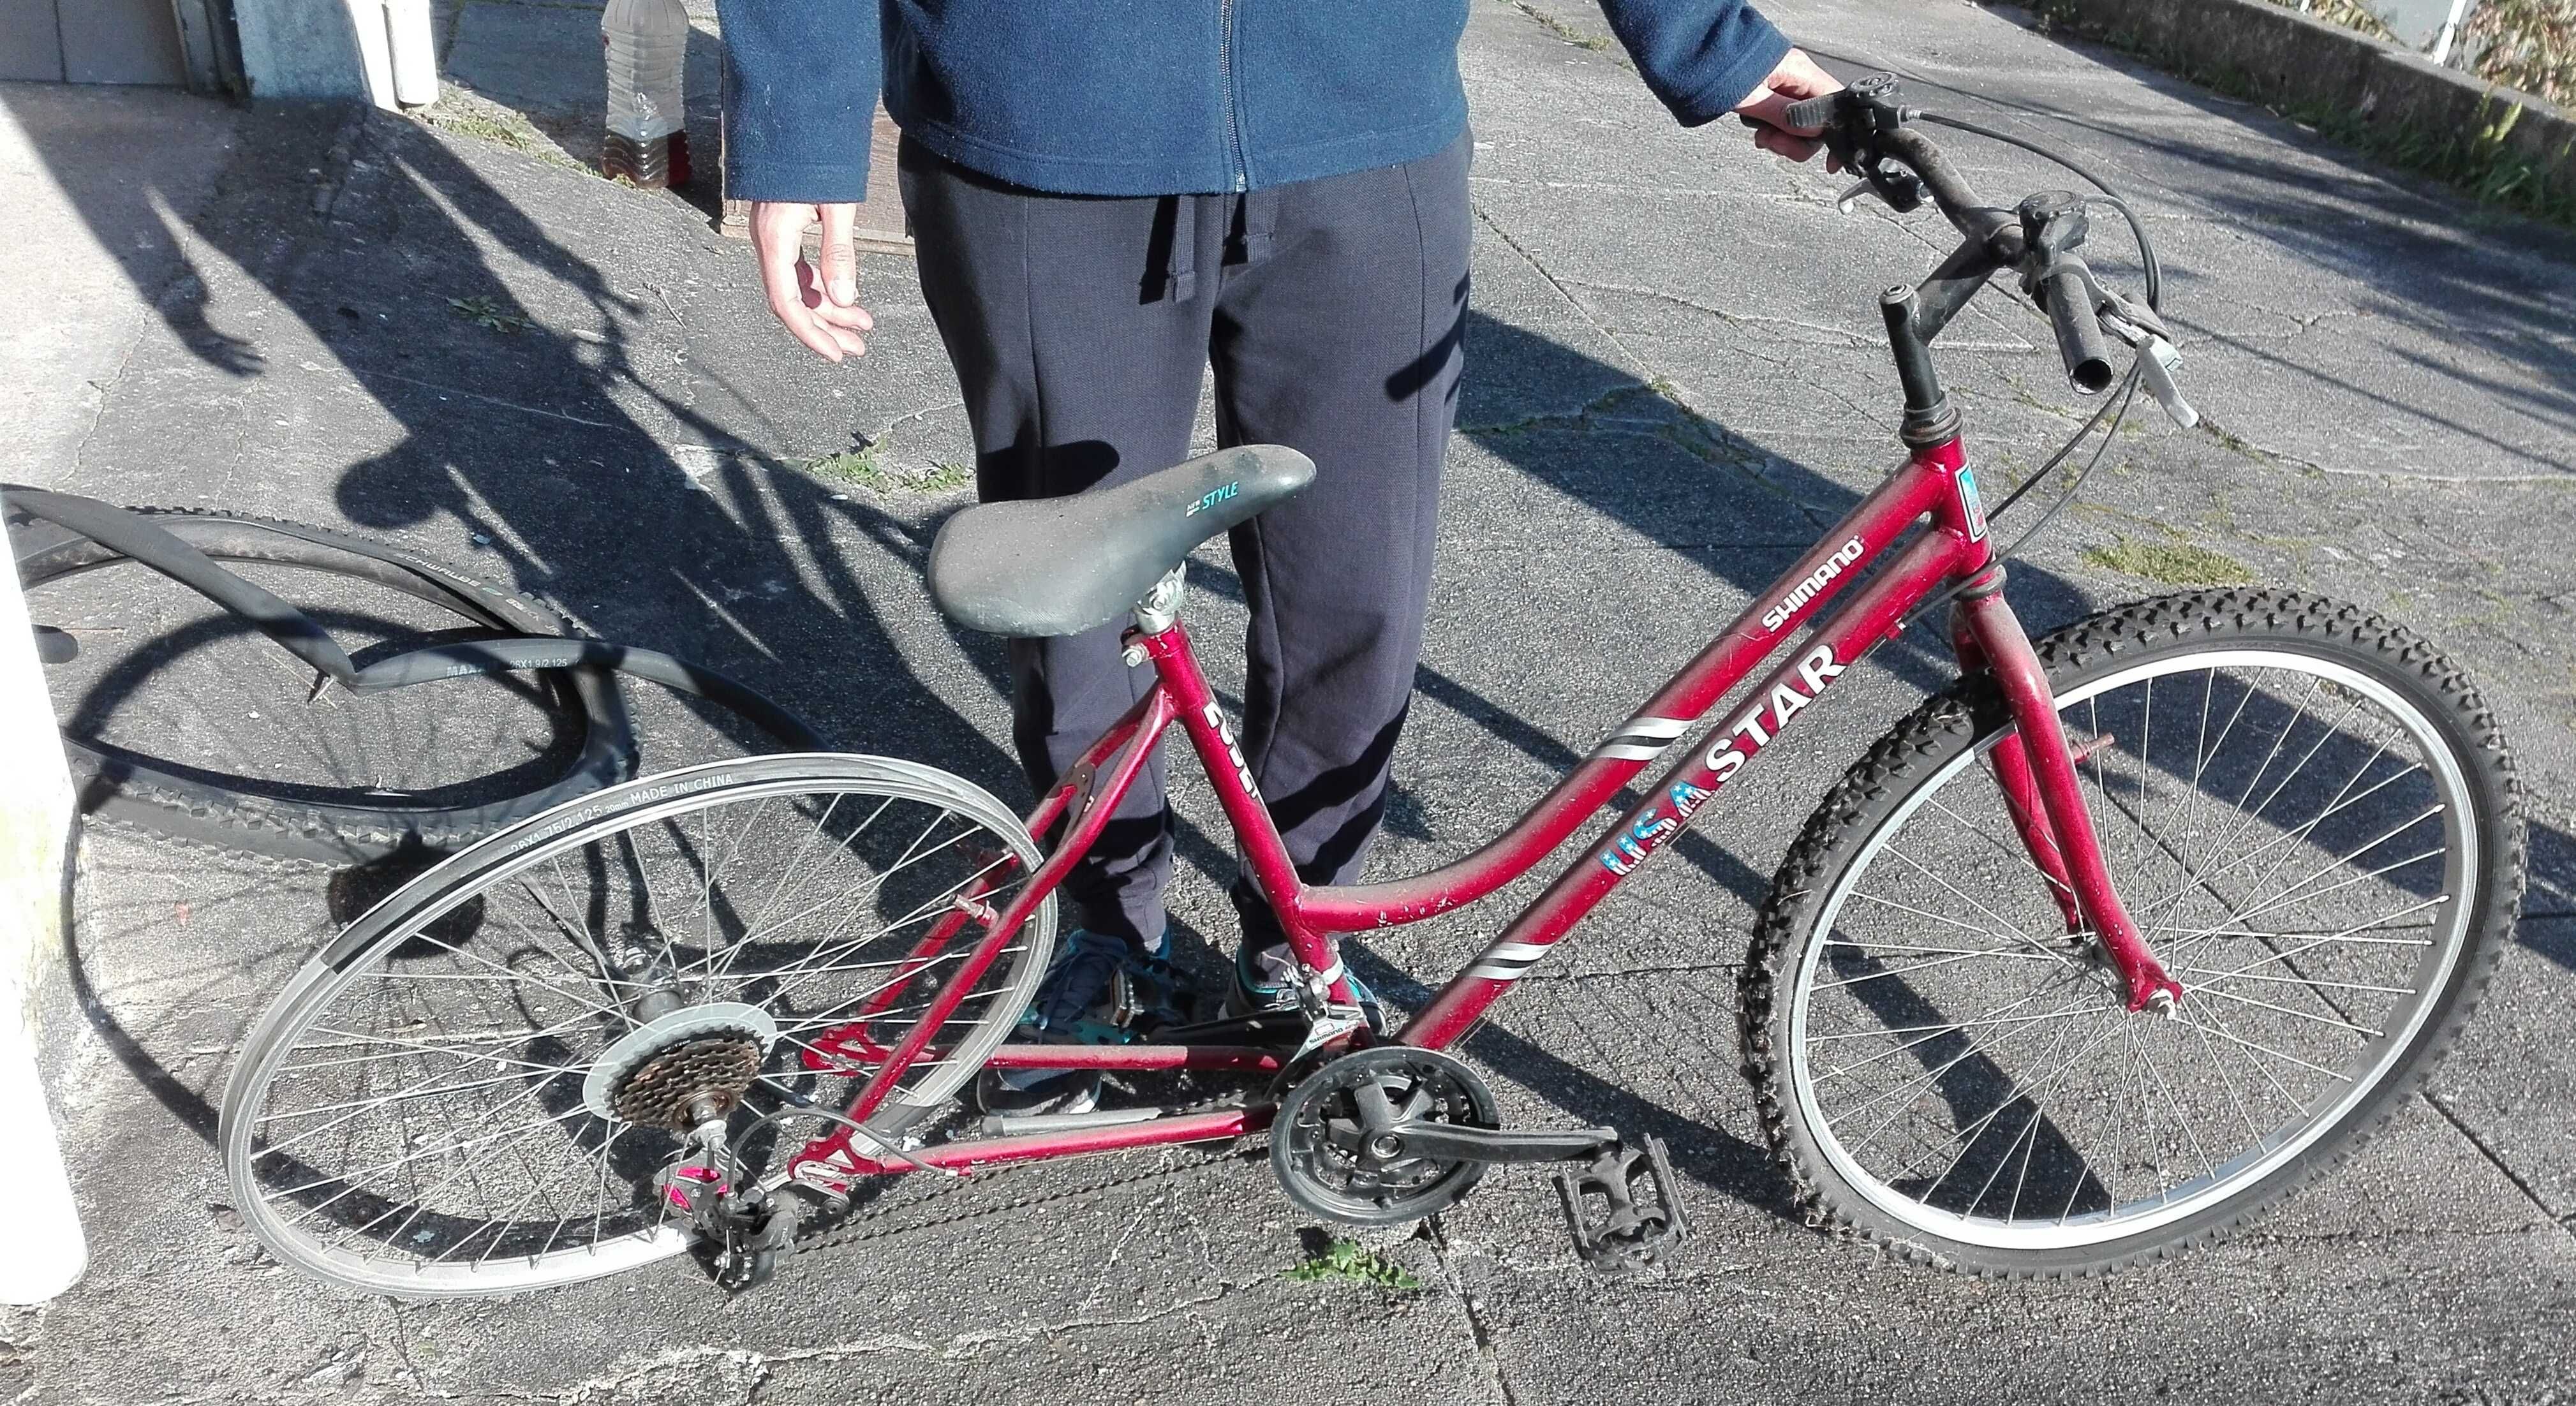 Bicicleta Mont - usada